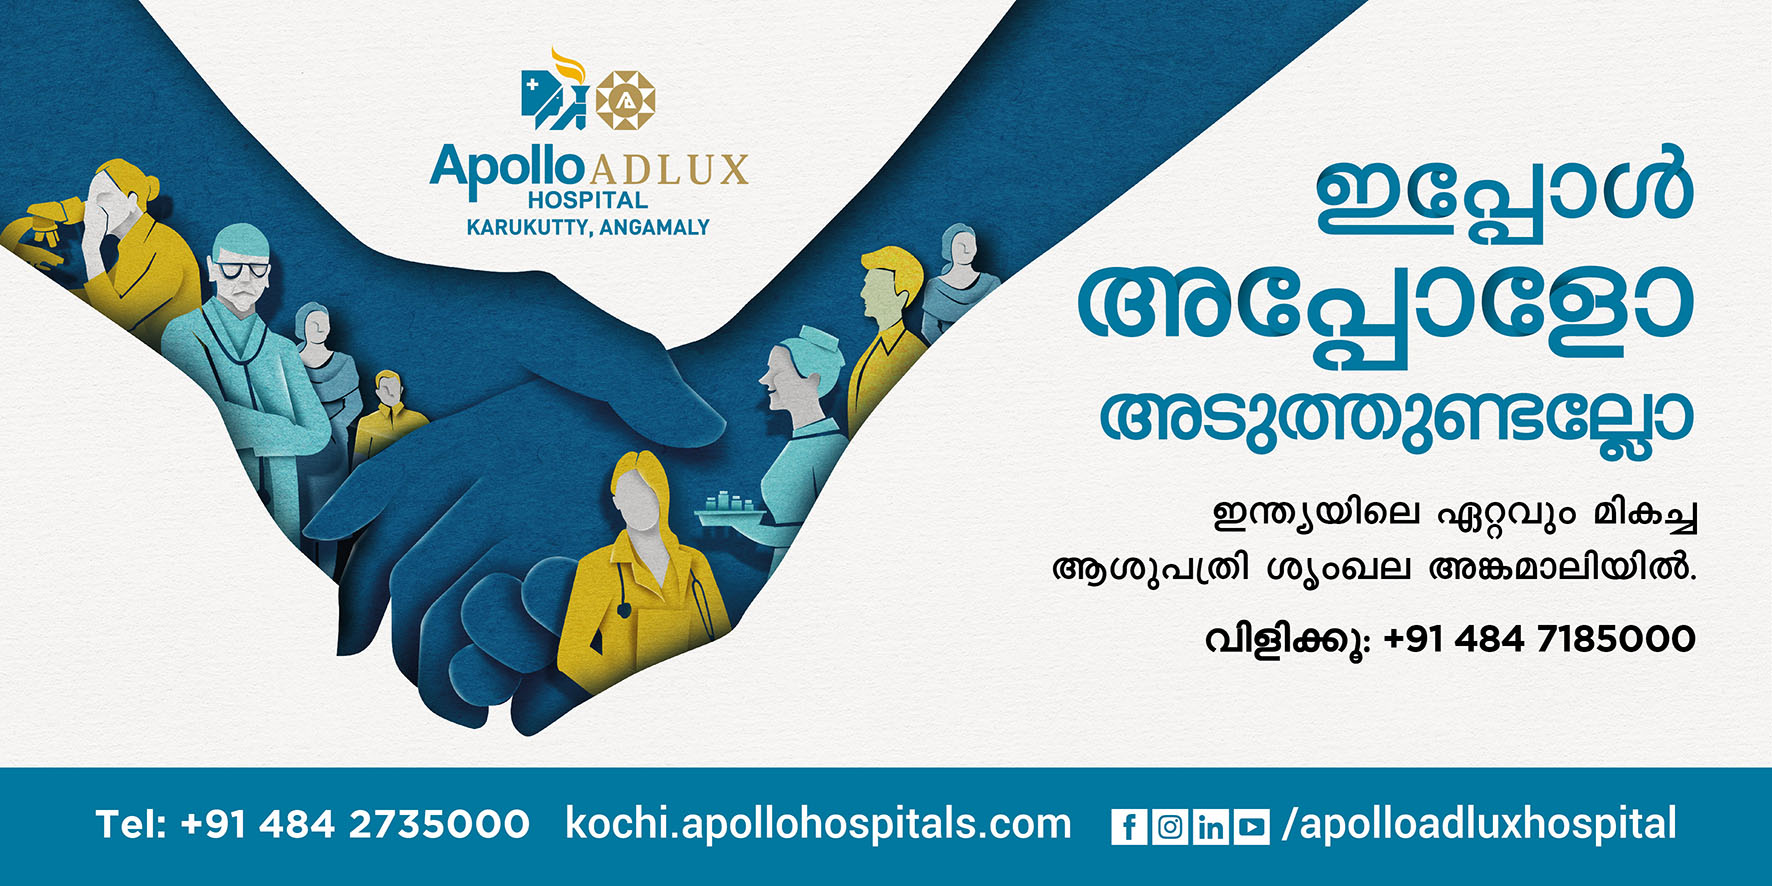 Apollo Adlux Hospital - Now in Kerala